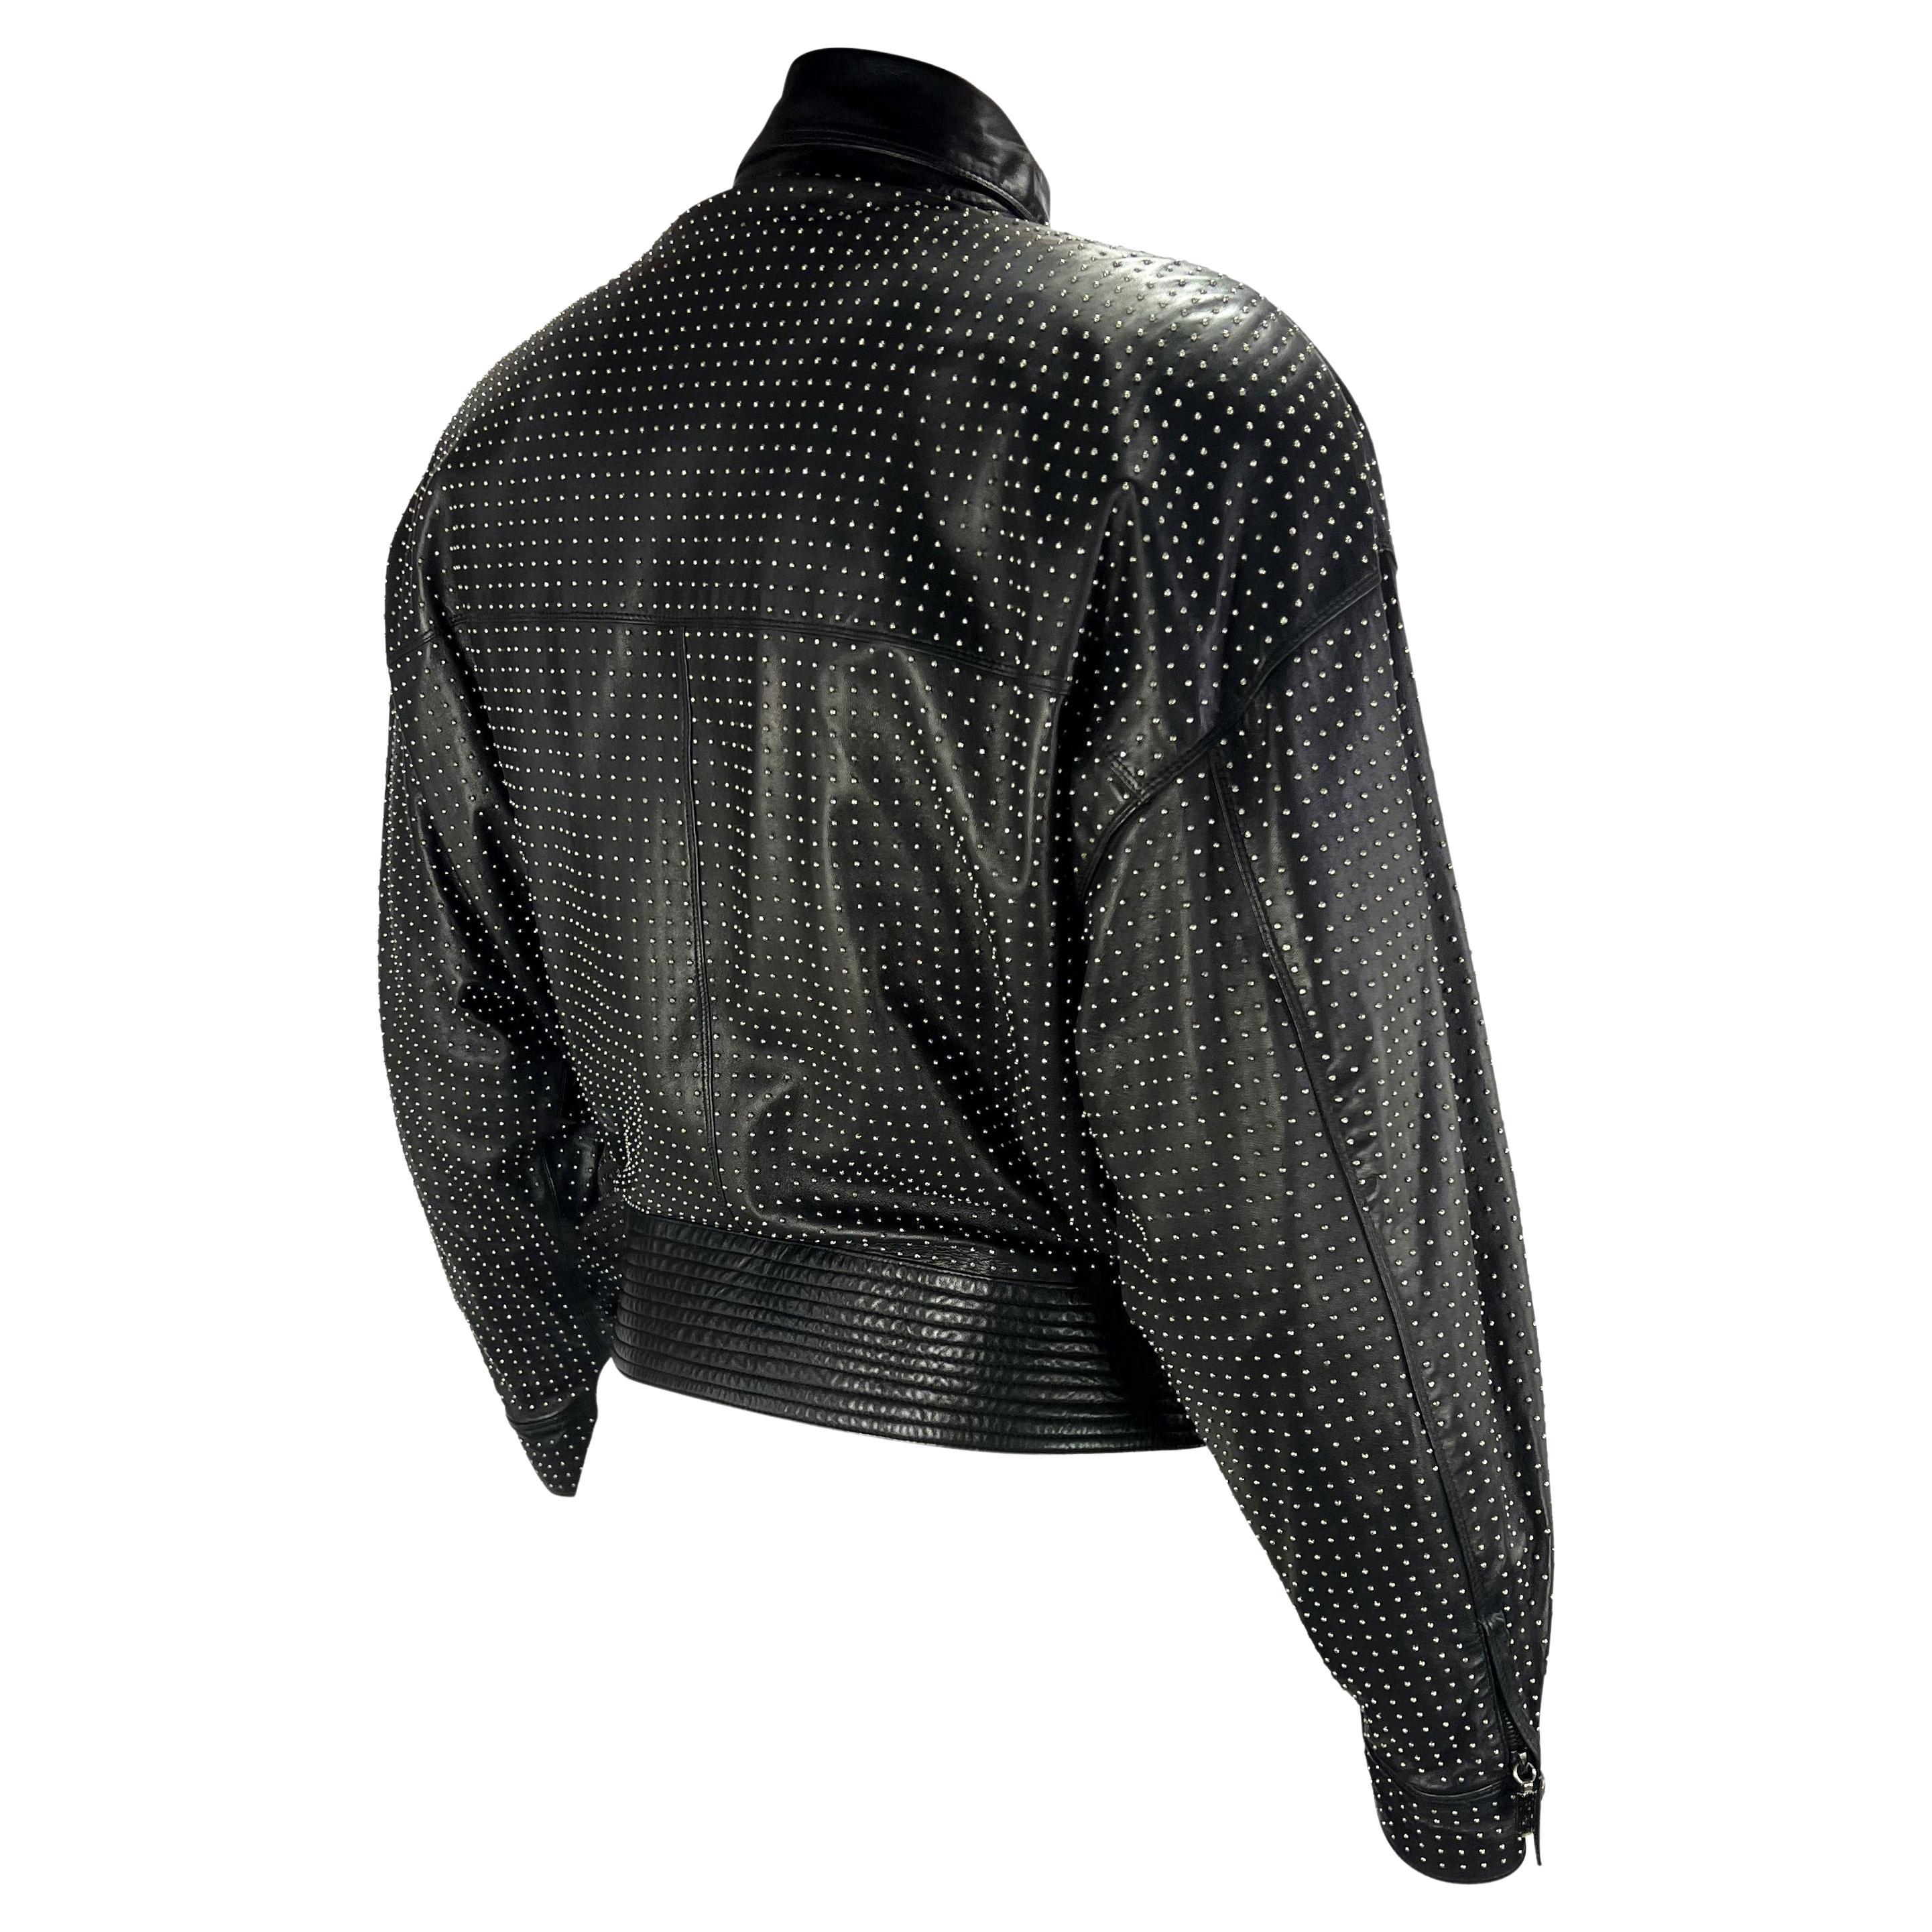 S/S 1992 Gianni Versace Men's Runway Studded Leather Greek Key Moto Jacket 2